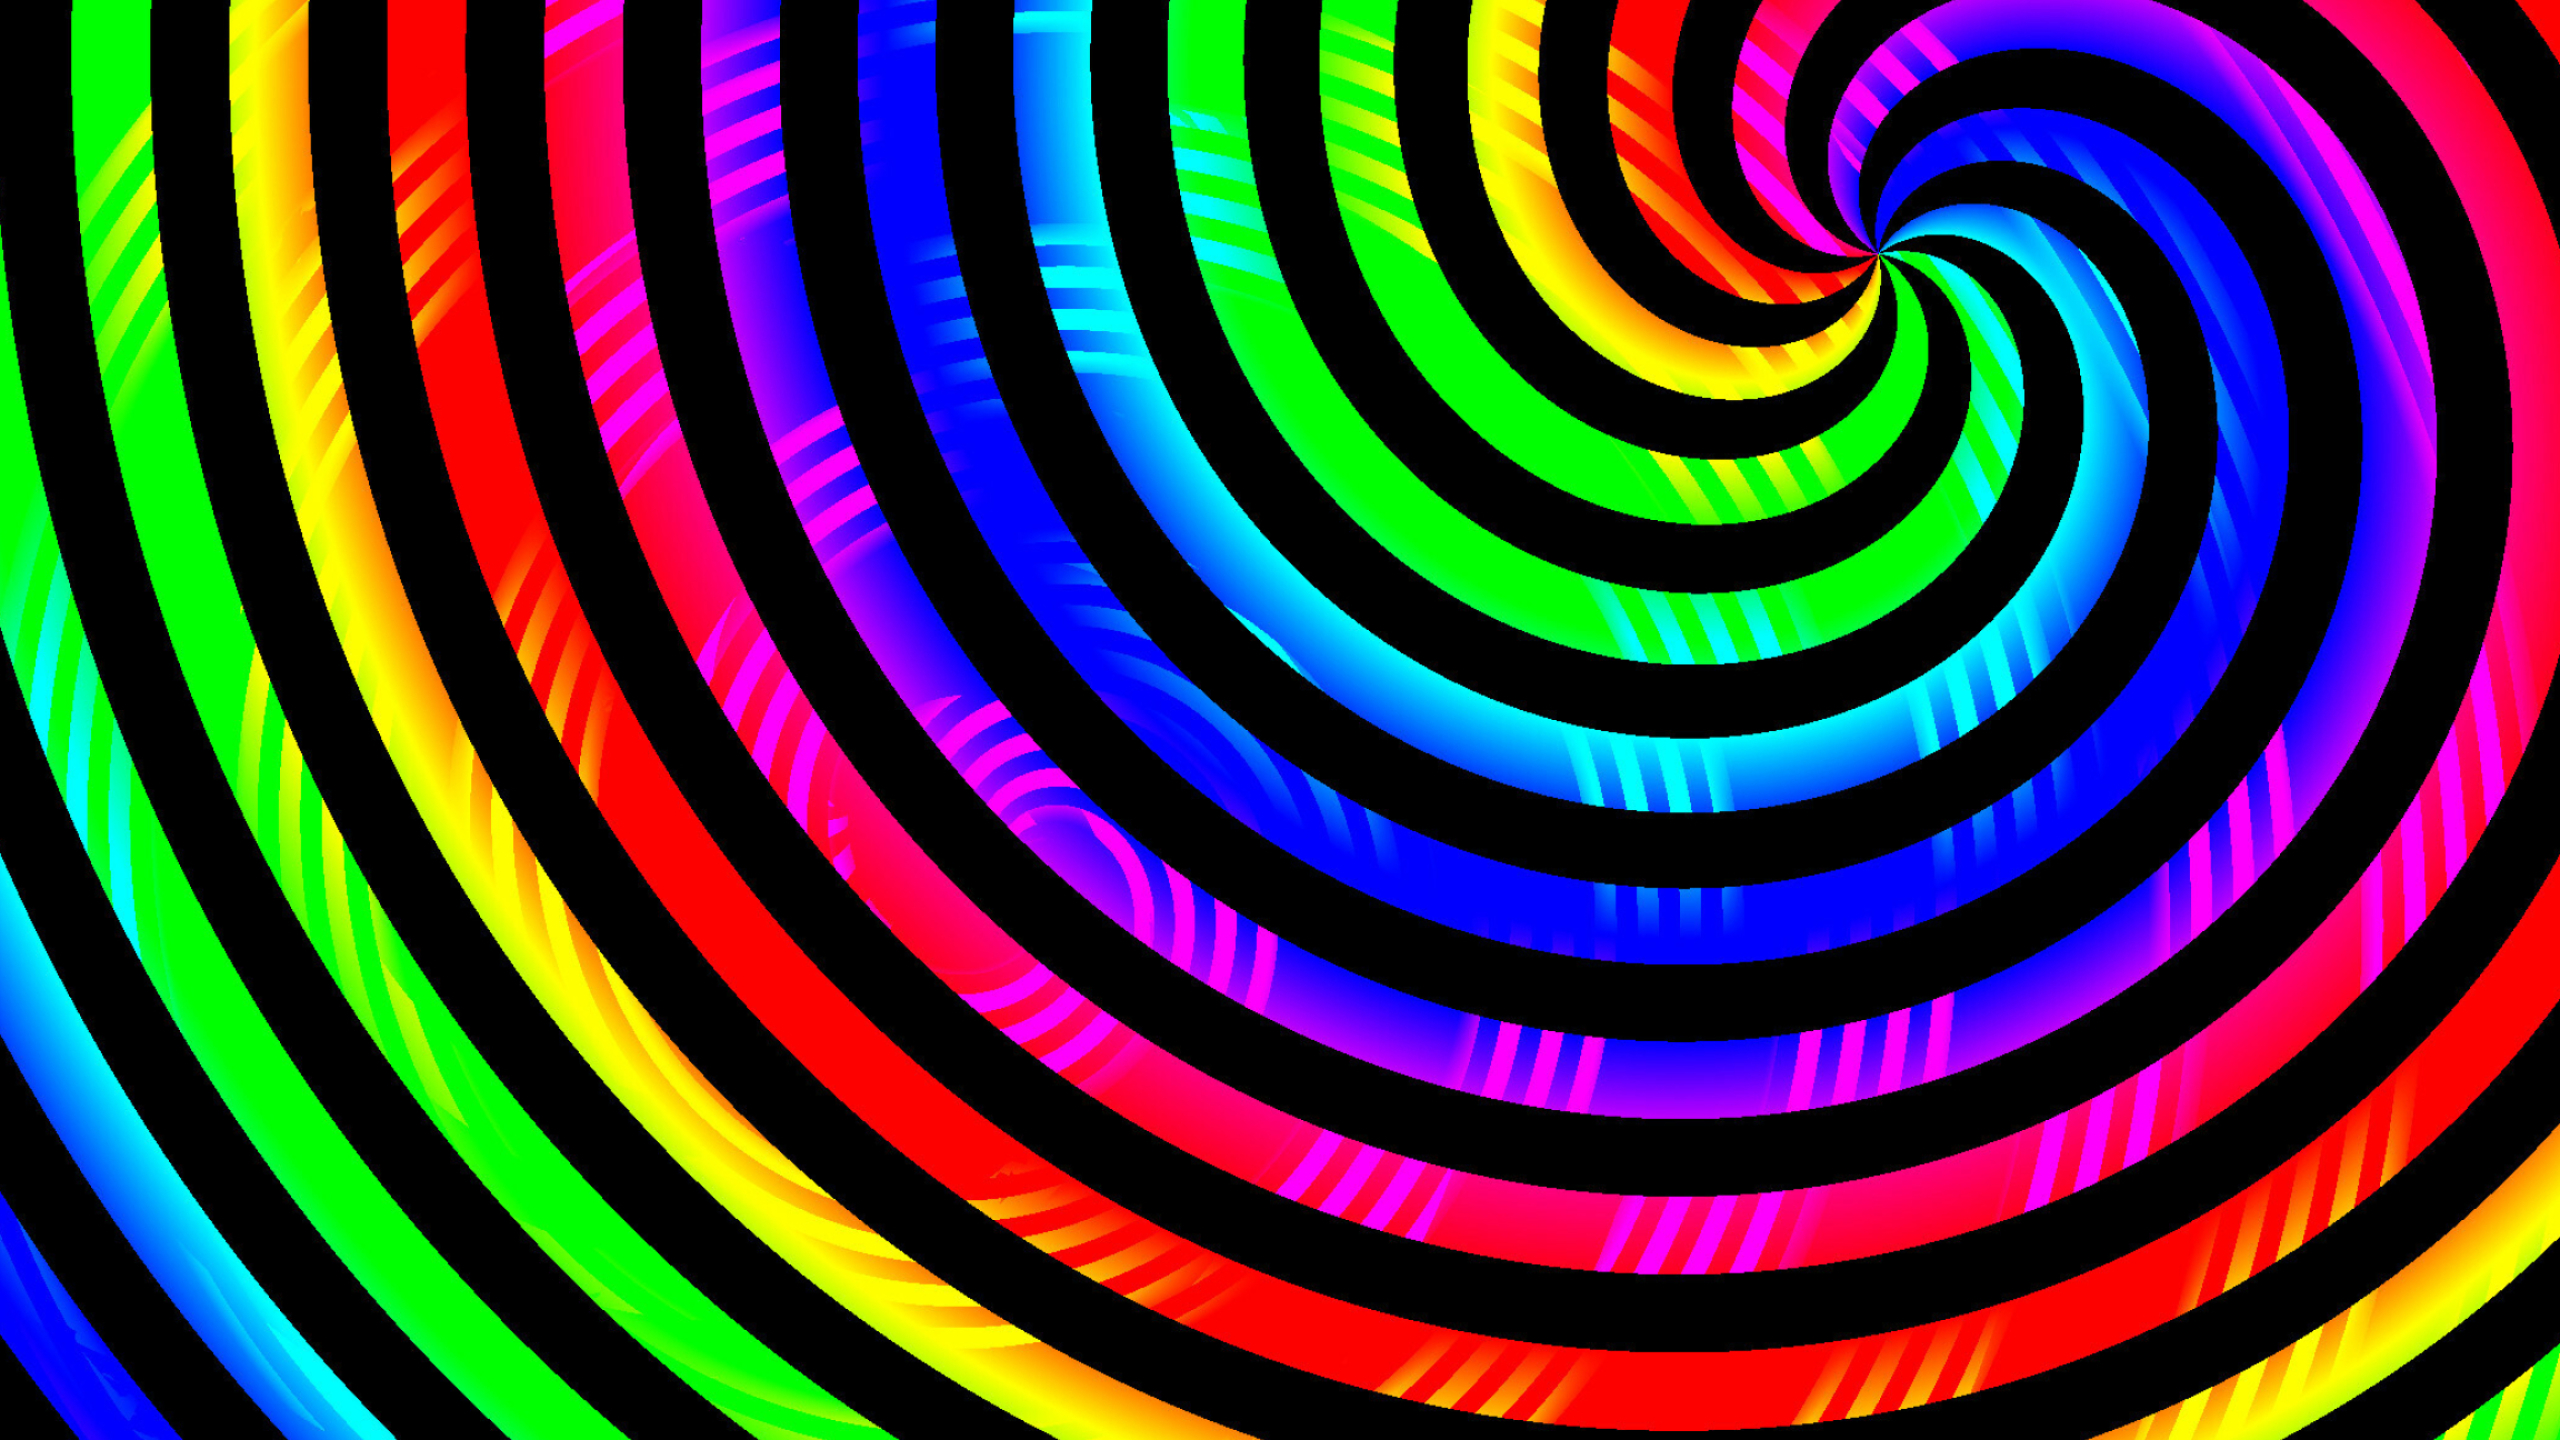 Rainbow Colors: Multitone spiral, Symmetry, Pattern, Visual arts. 2560x1440 HD Wallpaper.